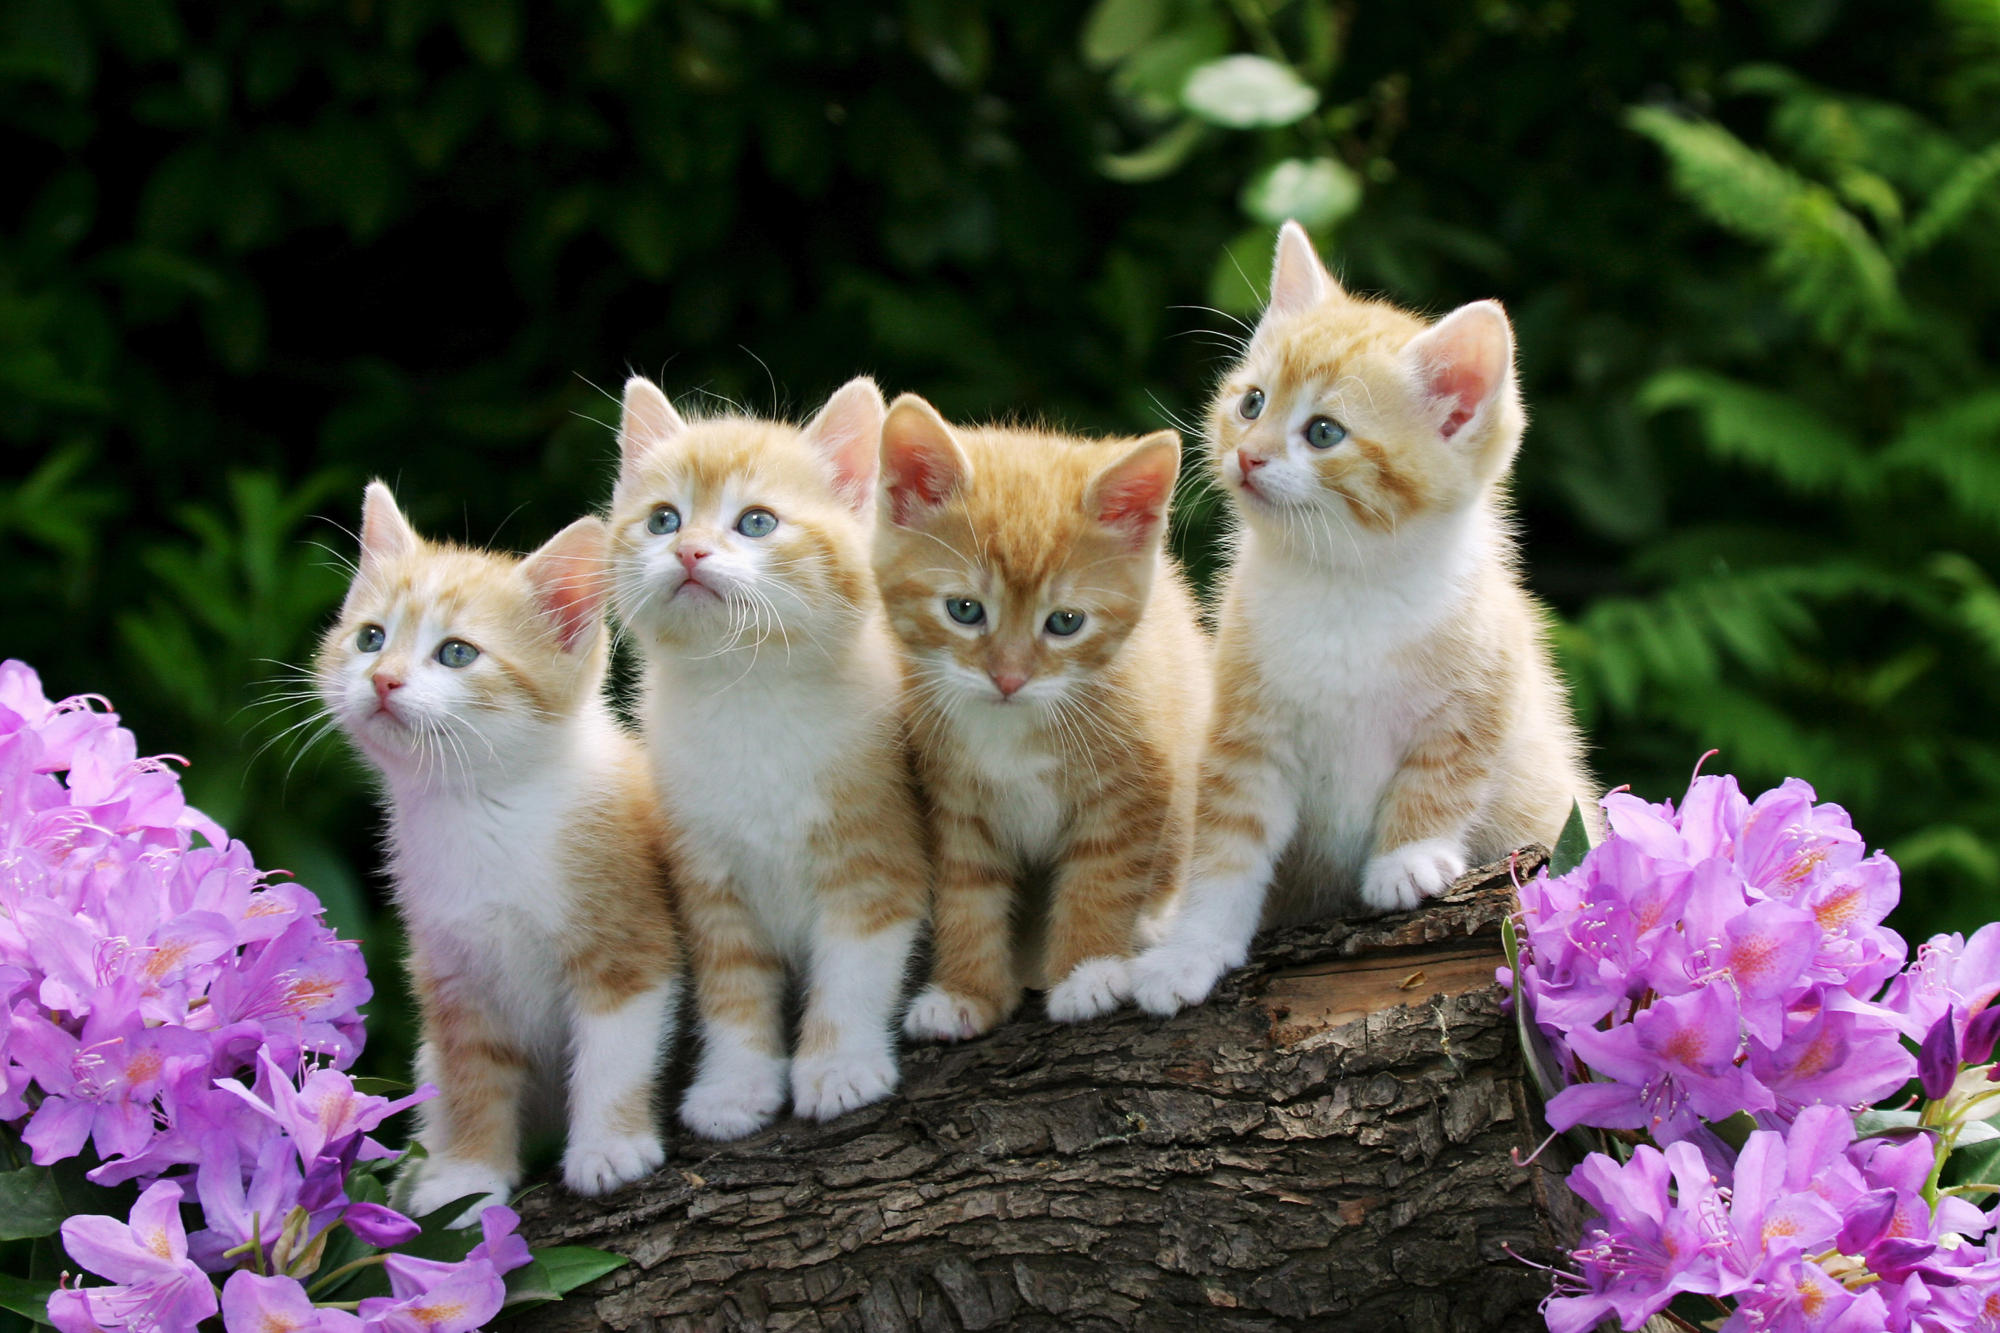 47+] Cute Cats and Kittens Wallpaper - WallpaperSafari